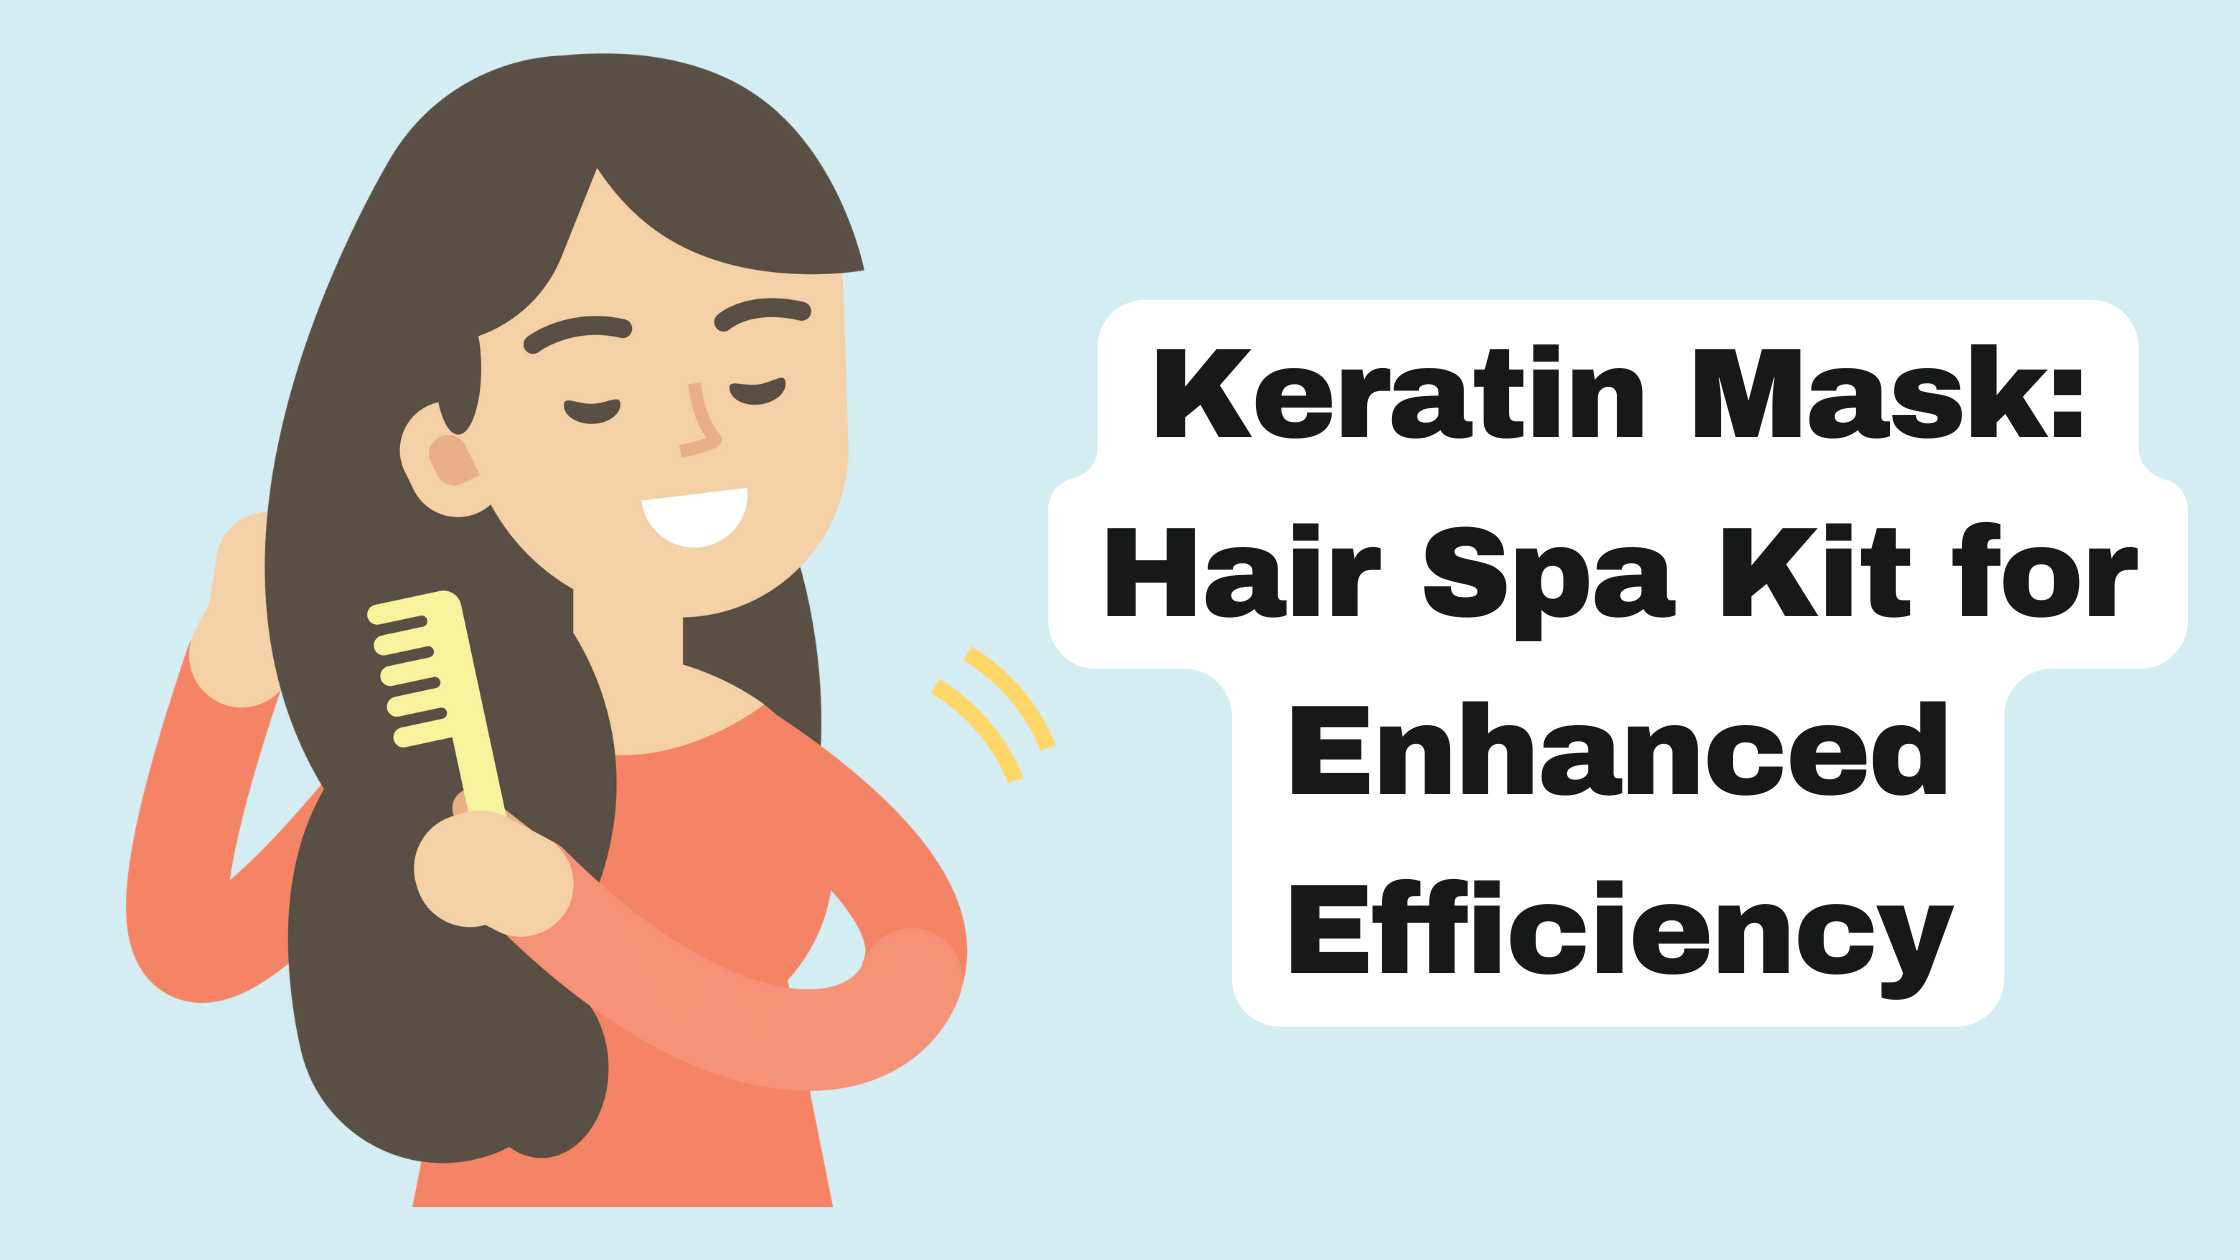 Keratin Mask: Hair Spa Kit for Enhanced Efficiency